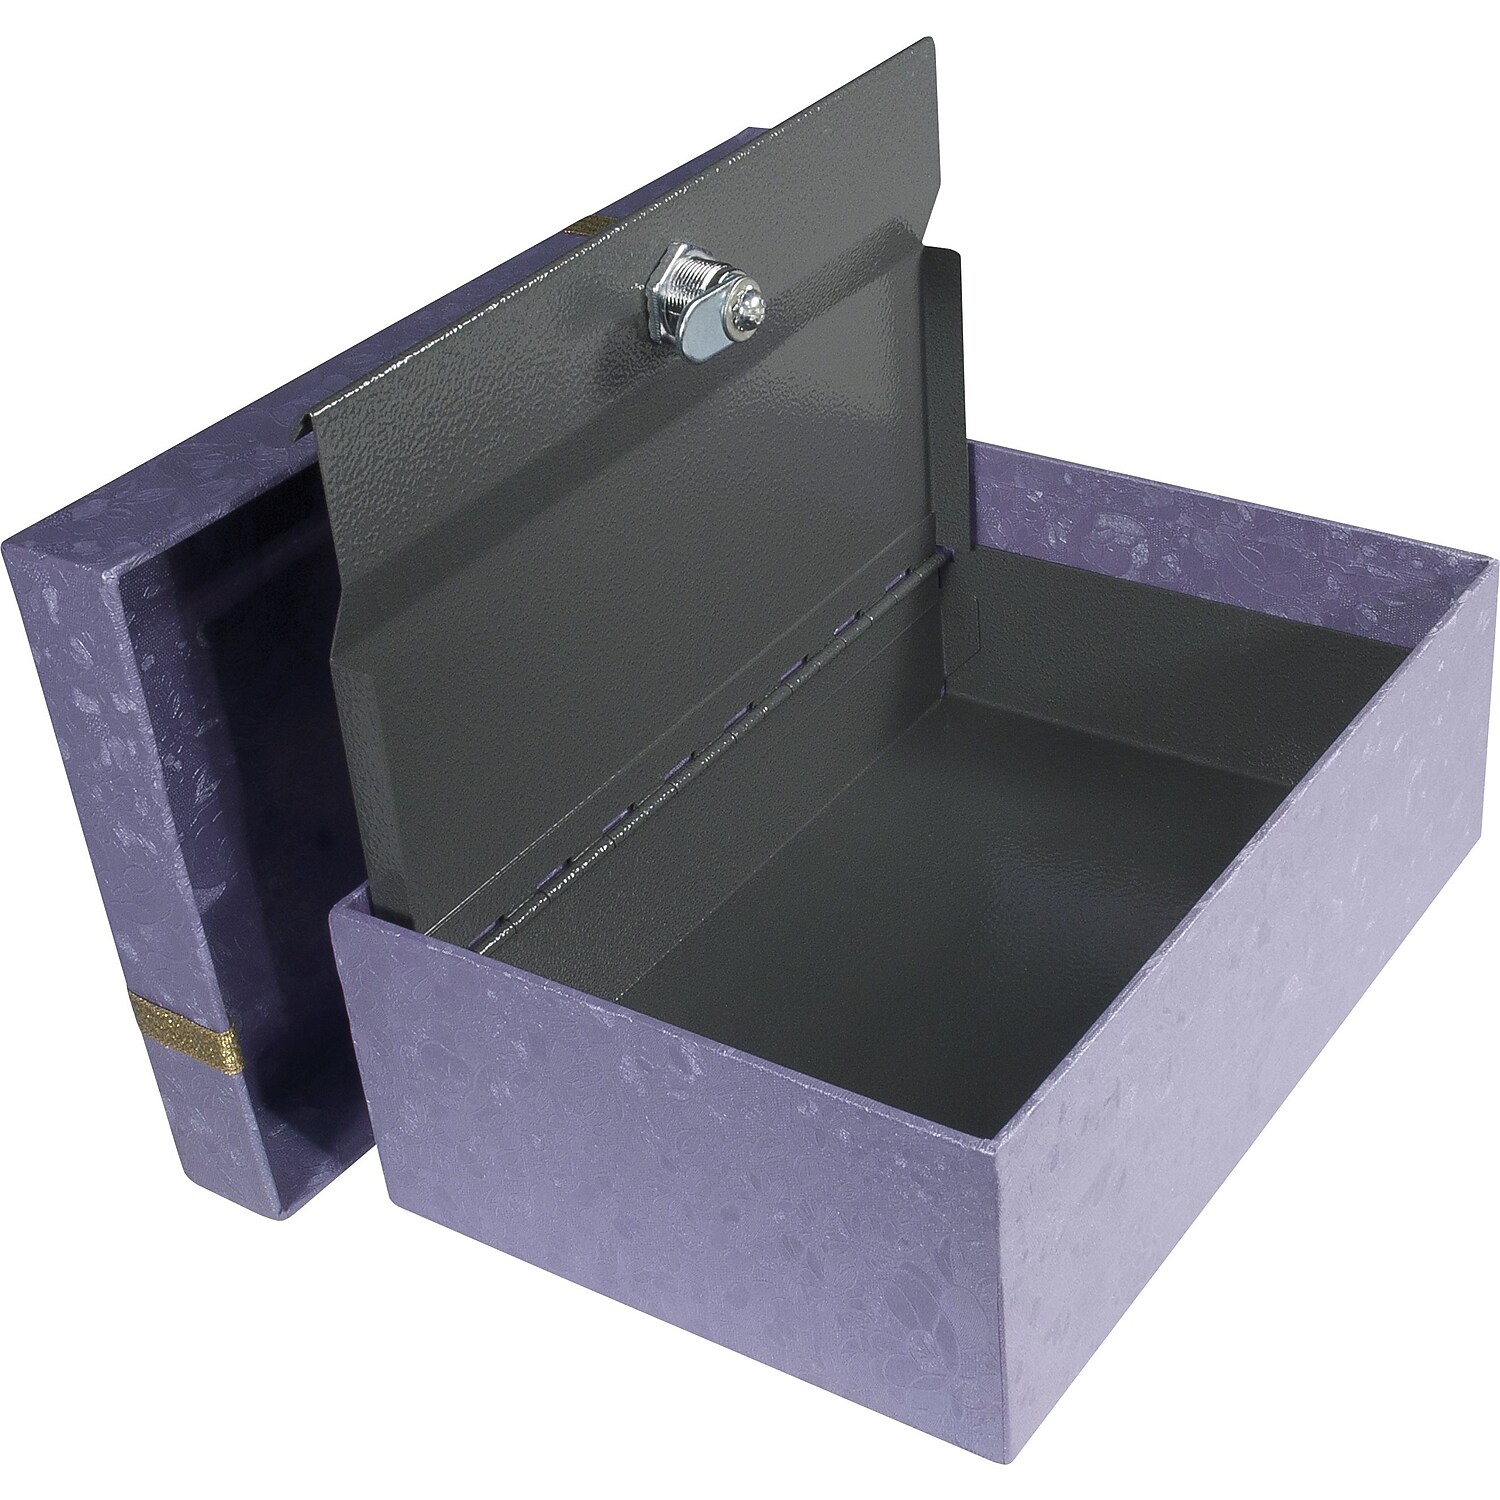 Barska Gift Box Safe with Key Lock CB11796 - image 2 of 5